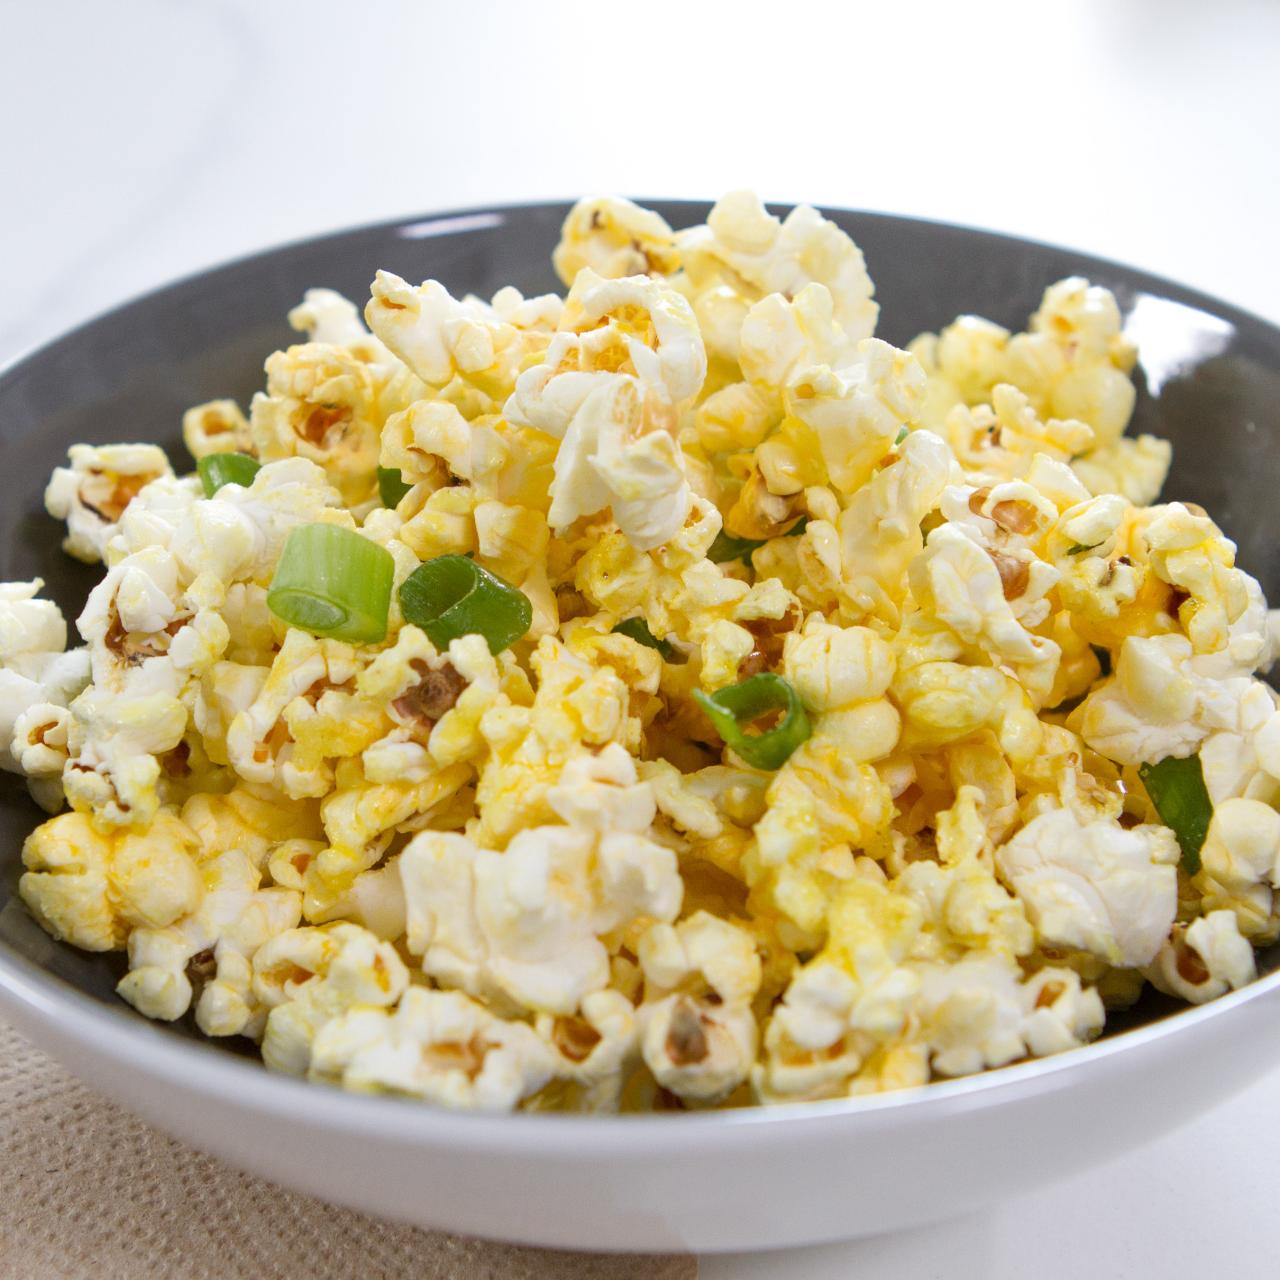 6 Best Popcorn Makers – How to Eat (Healthy) Fresh Popcorn